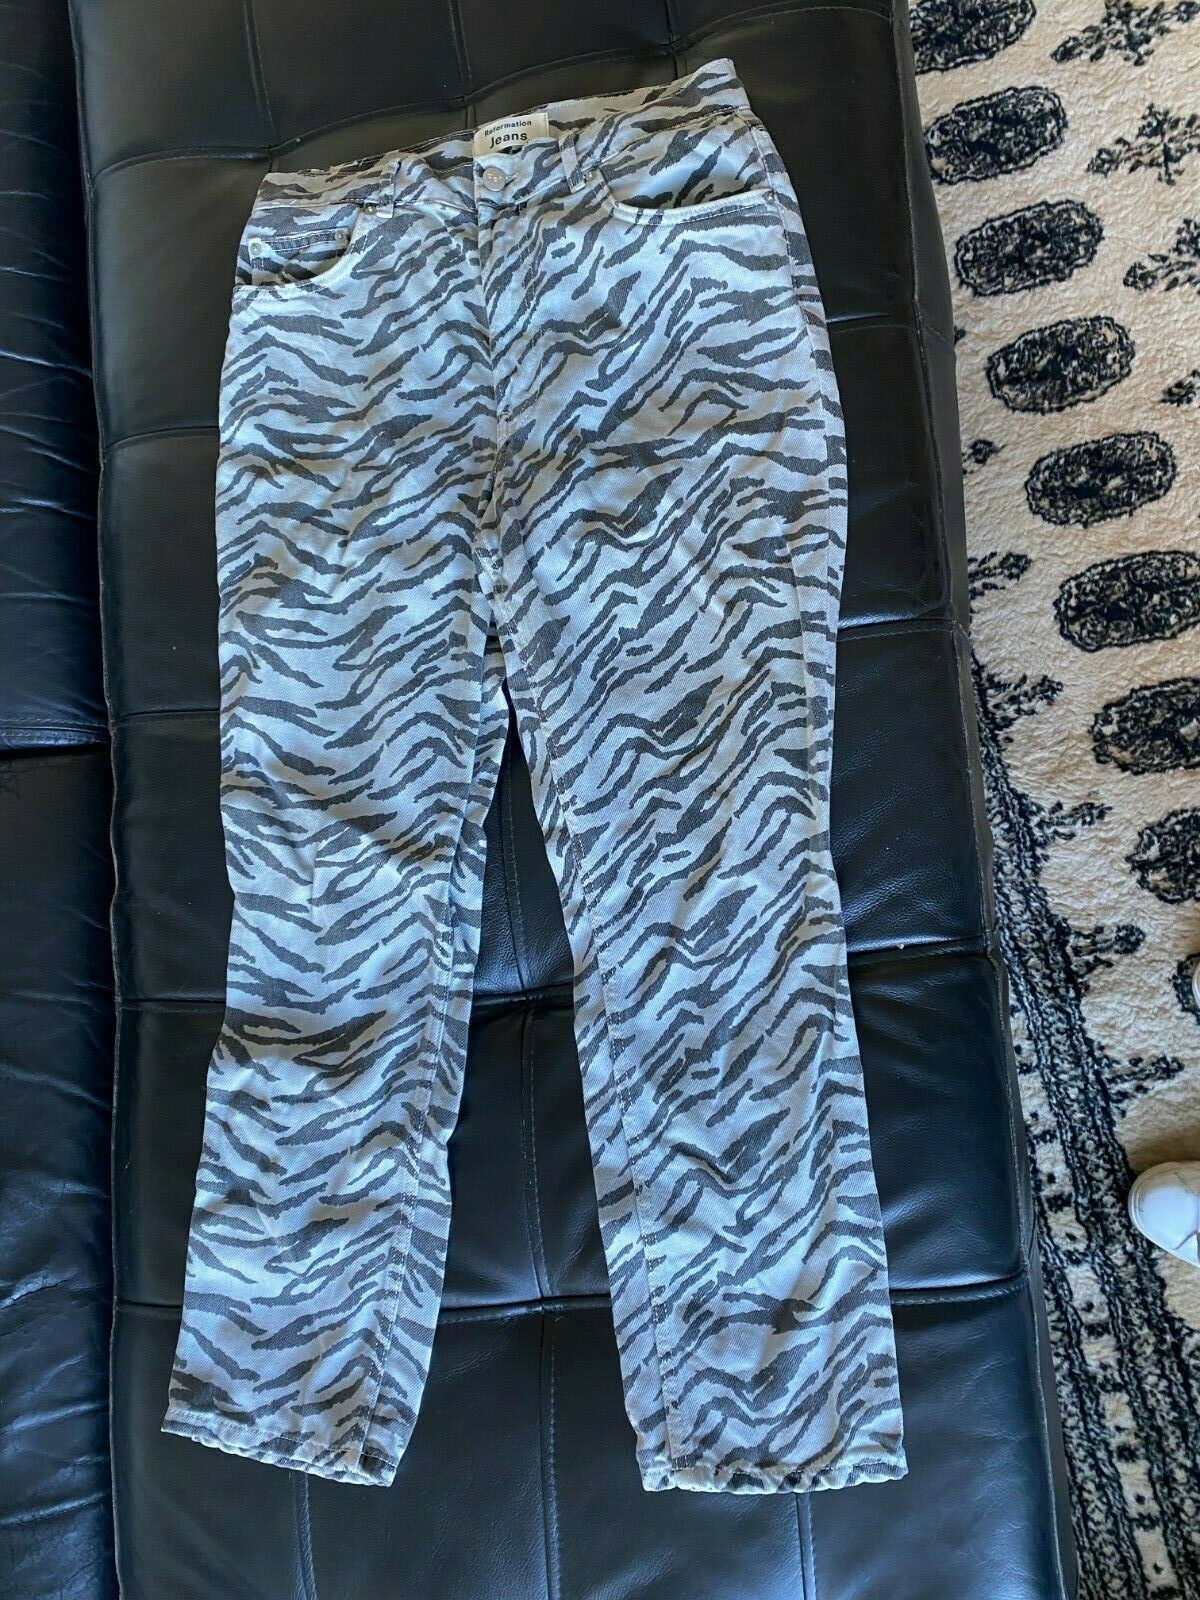 Reformation Julia Jeans size 28 in Zebra Print | Blue/ Black, High Waisted, Crop